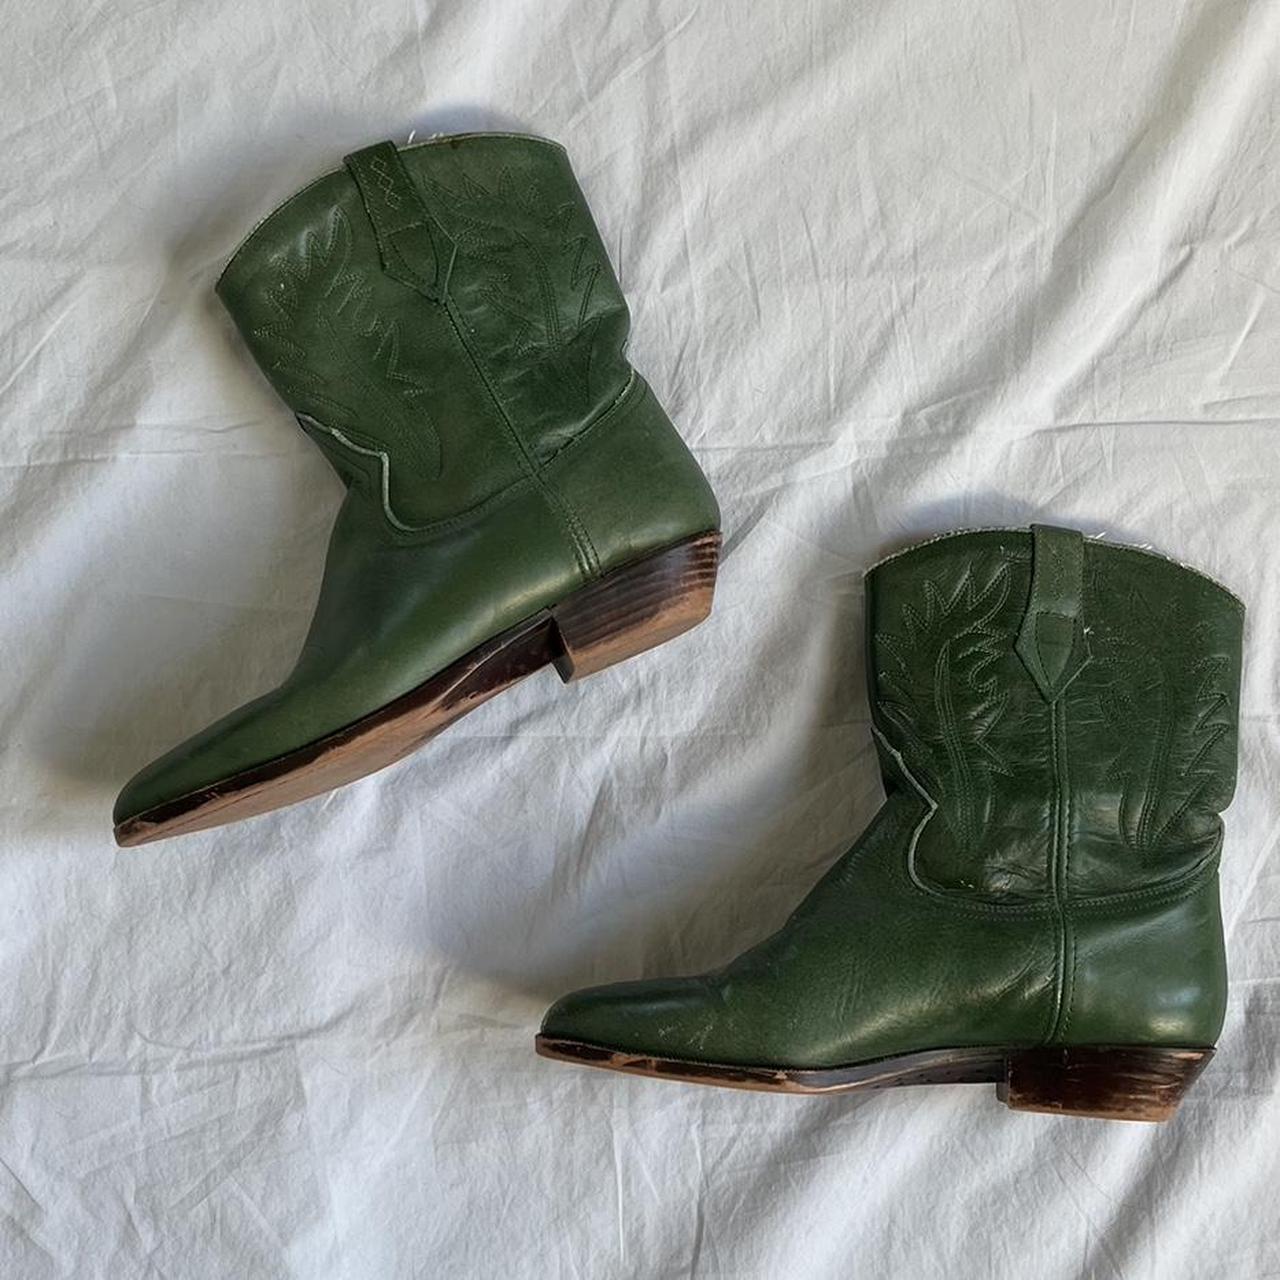 Bottega Veneta Women's Green and Brown Boots